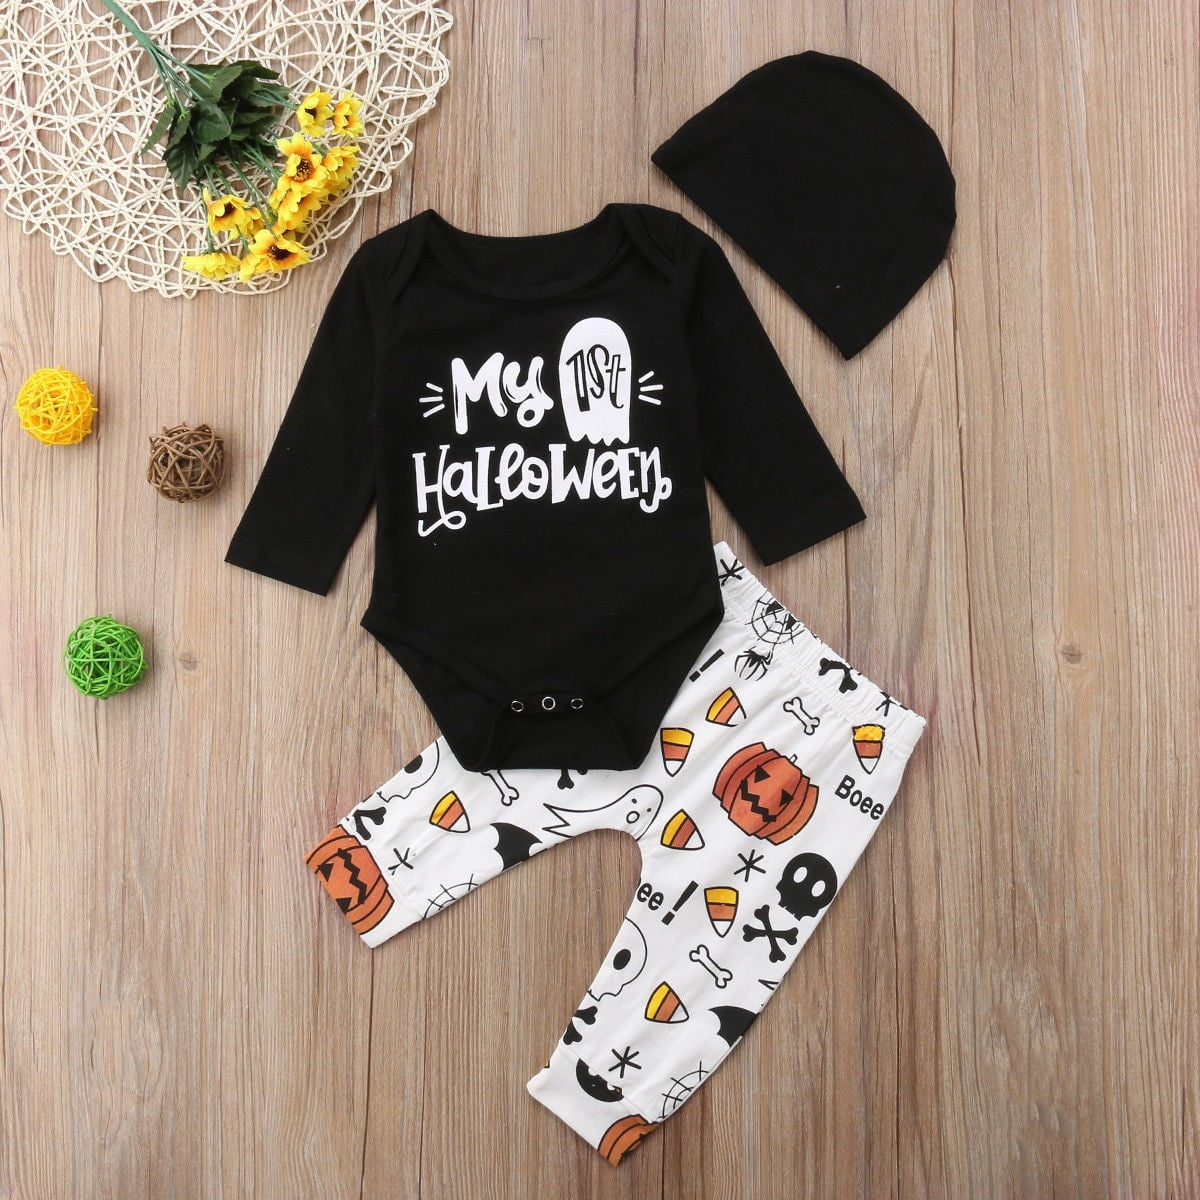 KONFA Toddler Newborn Baby Boys Girls Halloween Clothes,Letter Pumpkin Romper+Trousers+Hat,Kids 3Pcs Outfits Sets